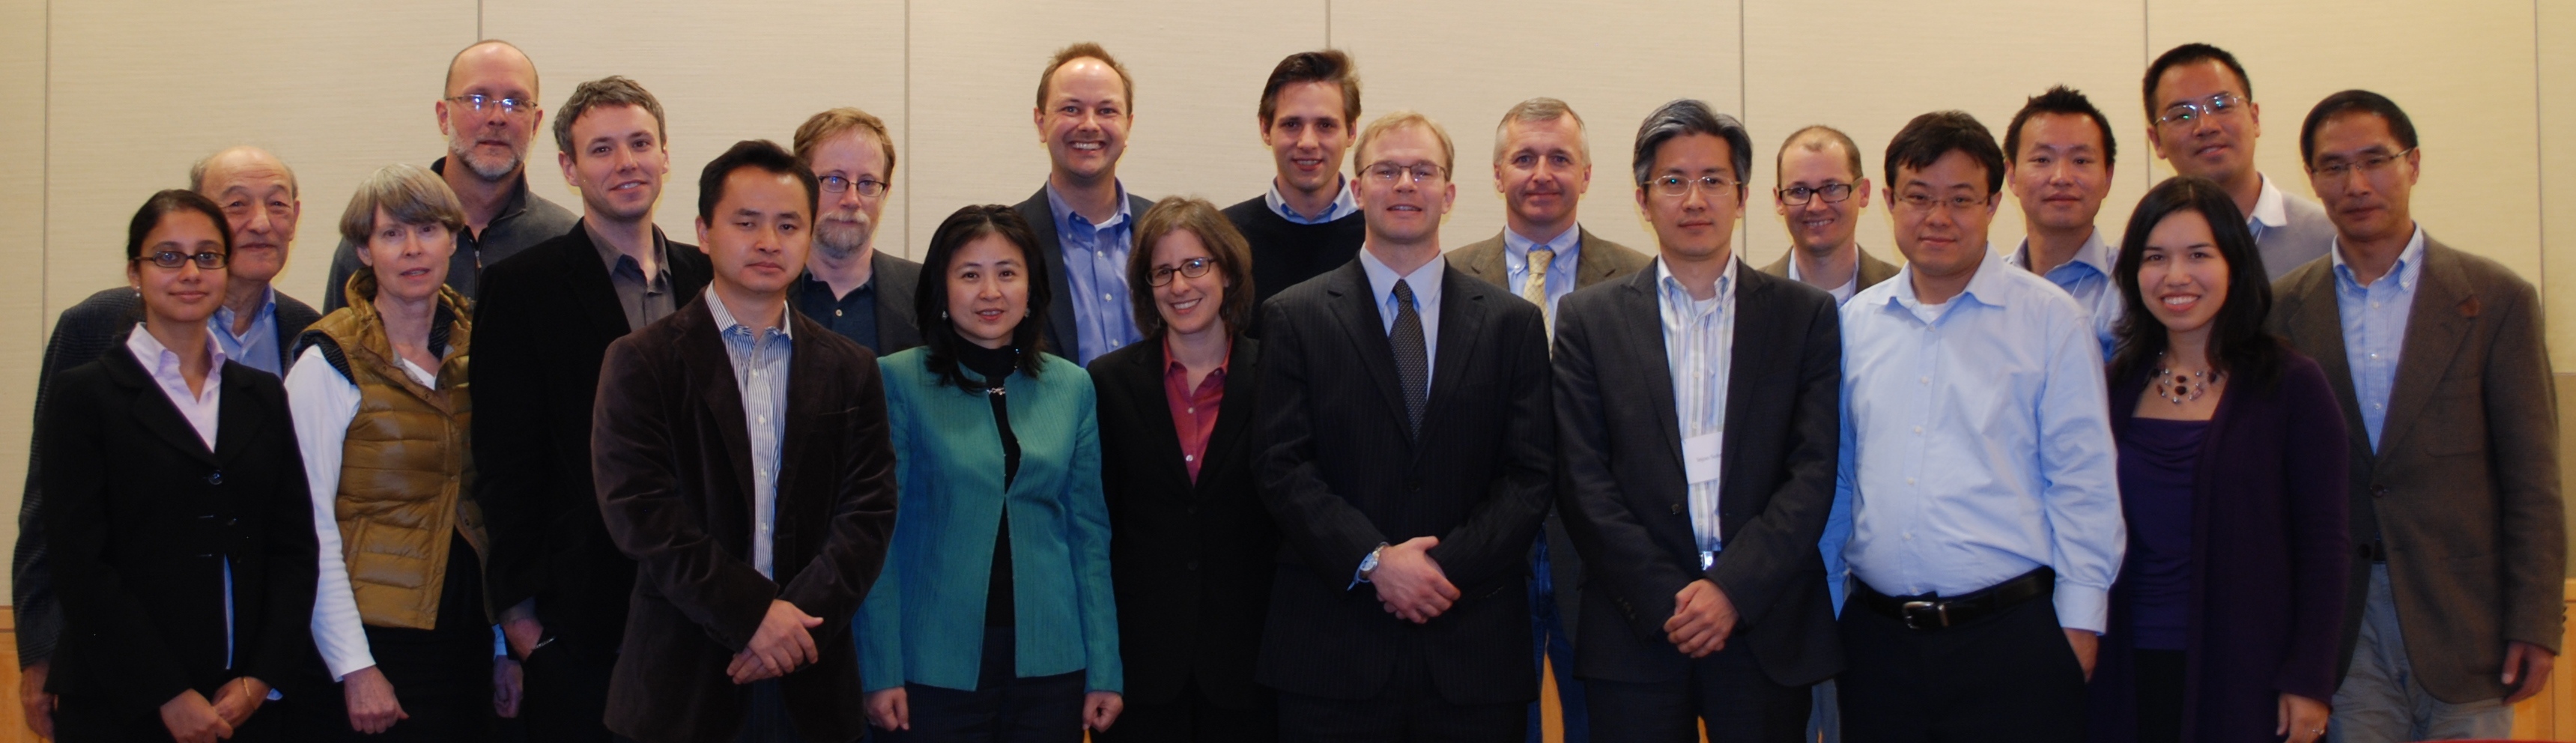 Princeton-Harvard China and the World Program--2011 Fellows Workshop--Group Photo